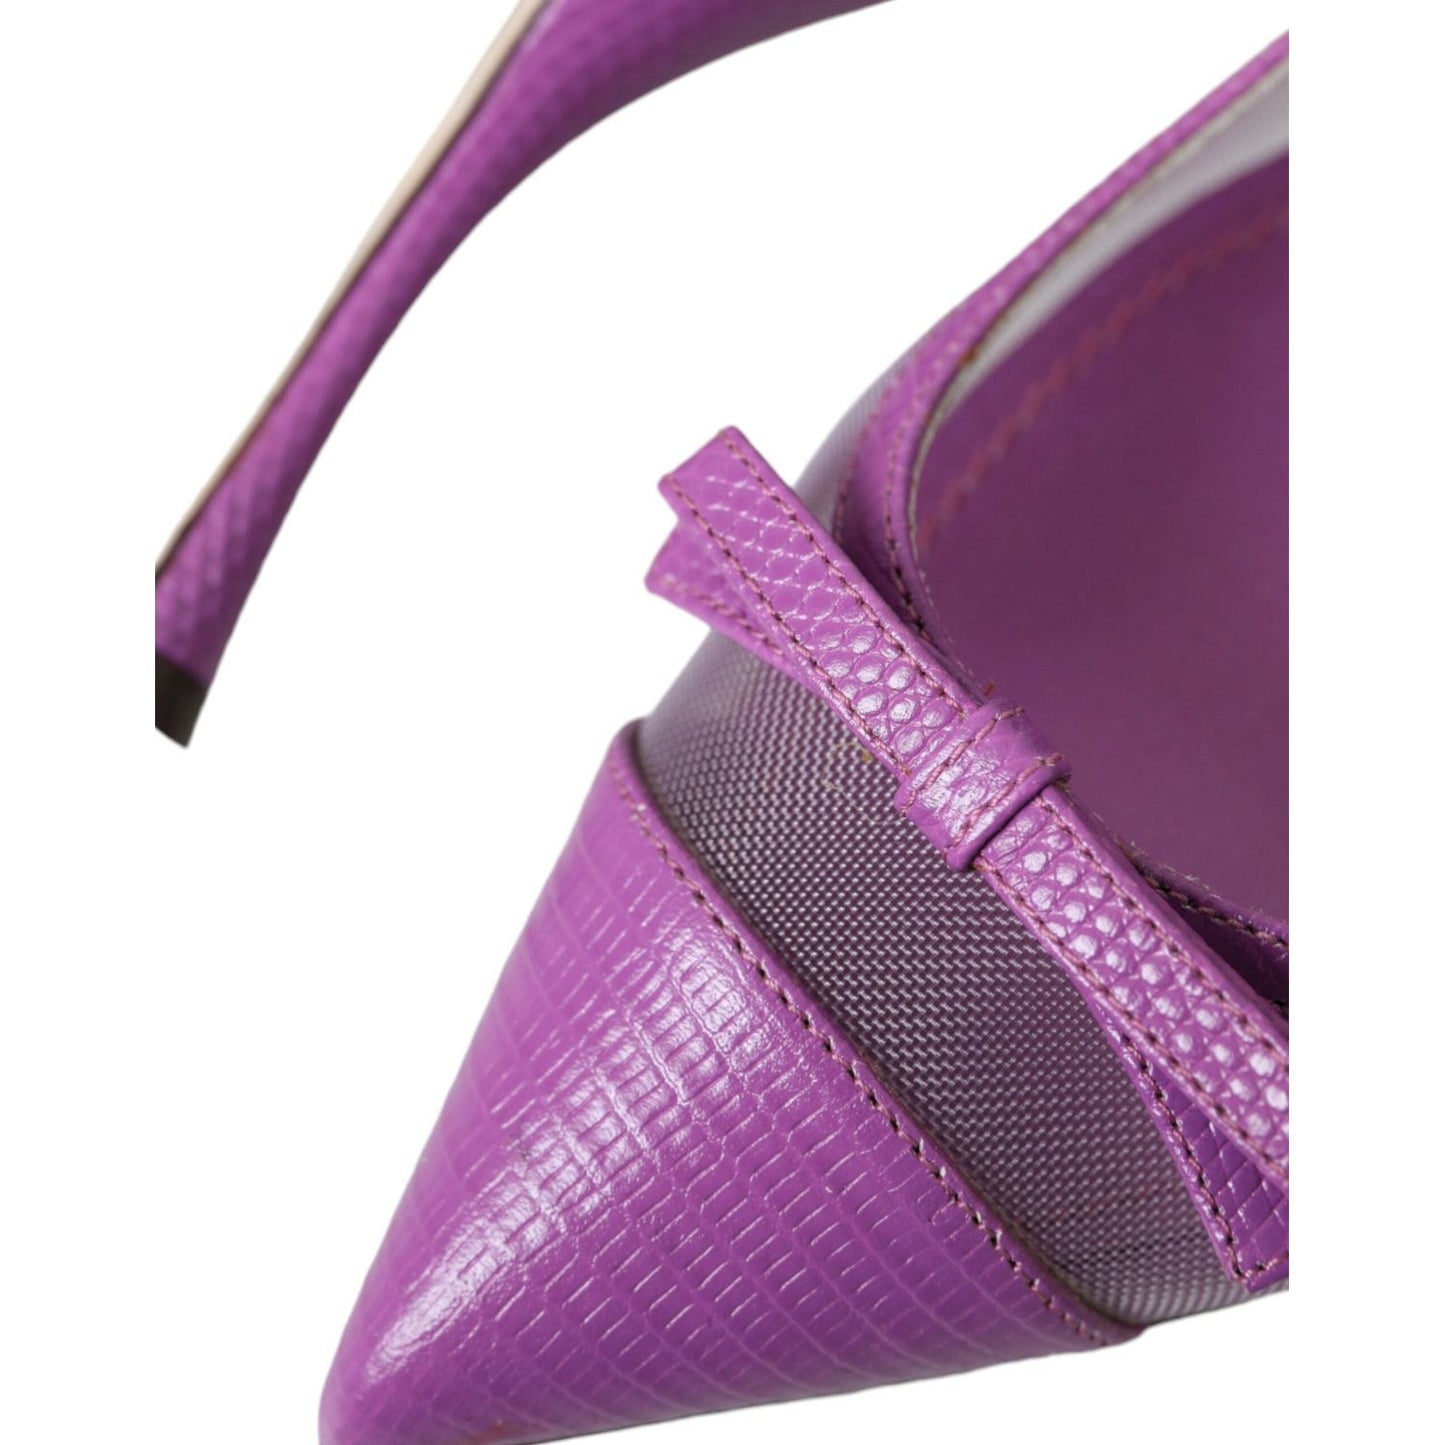 Dolce & Gabbana Purple Leather Mesh High Heels Slingback Shoes purple-leather-mesh-high-heels-slingback-shoes